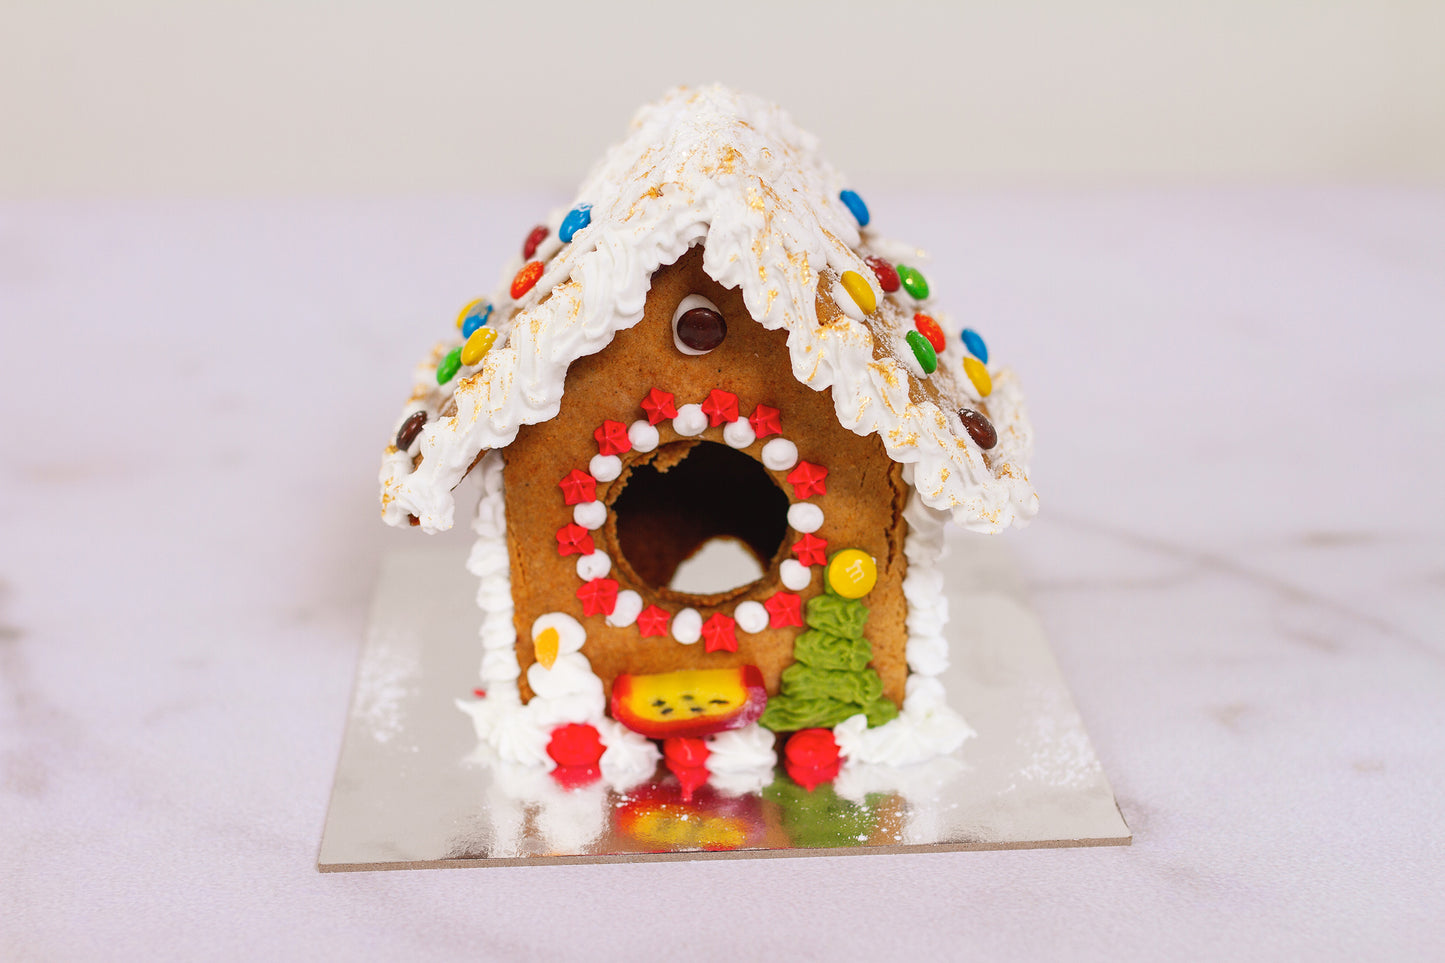 Gingerbread House - Mini 7cm